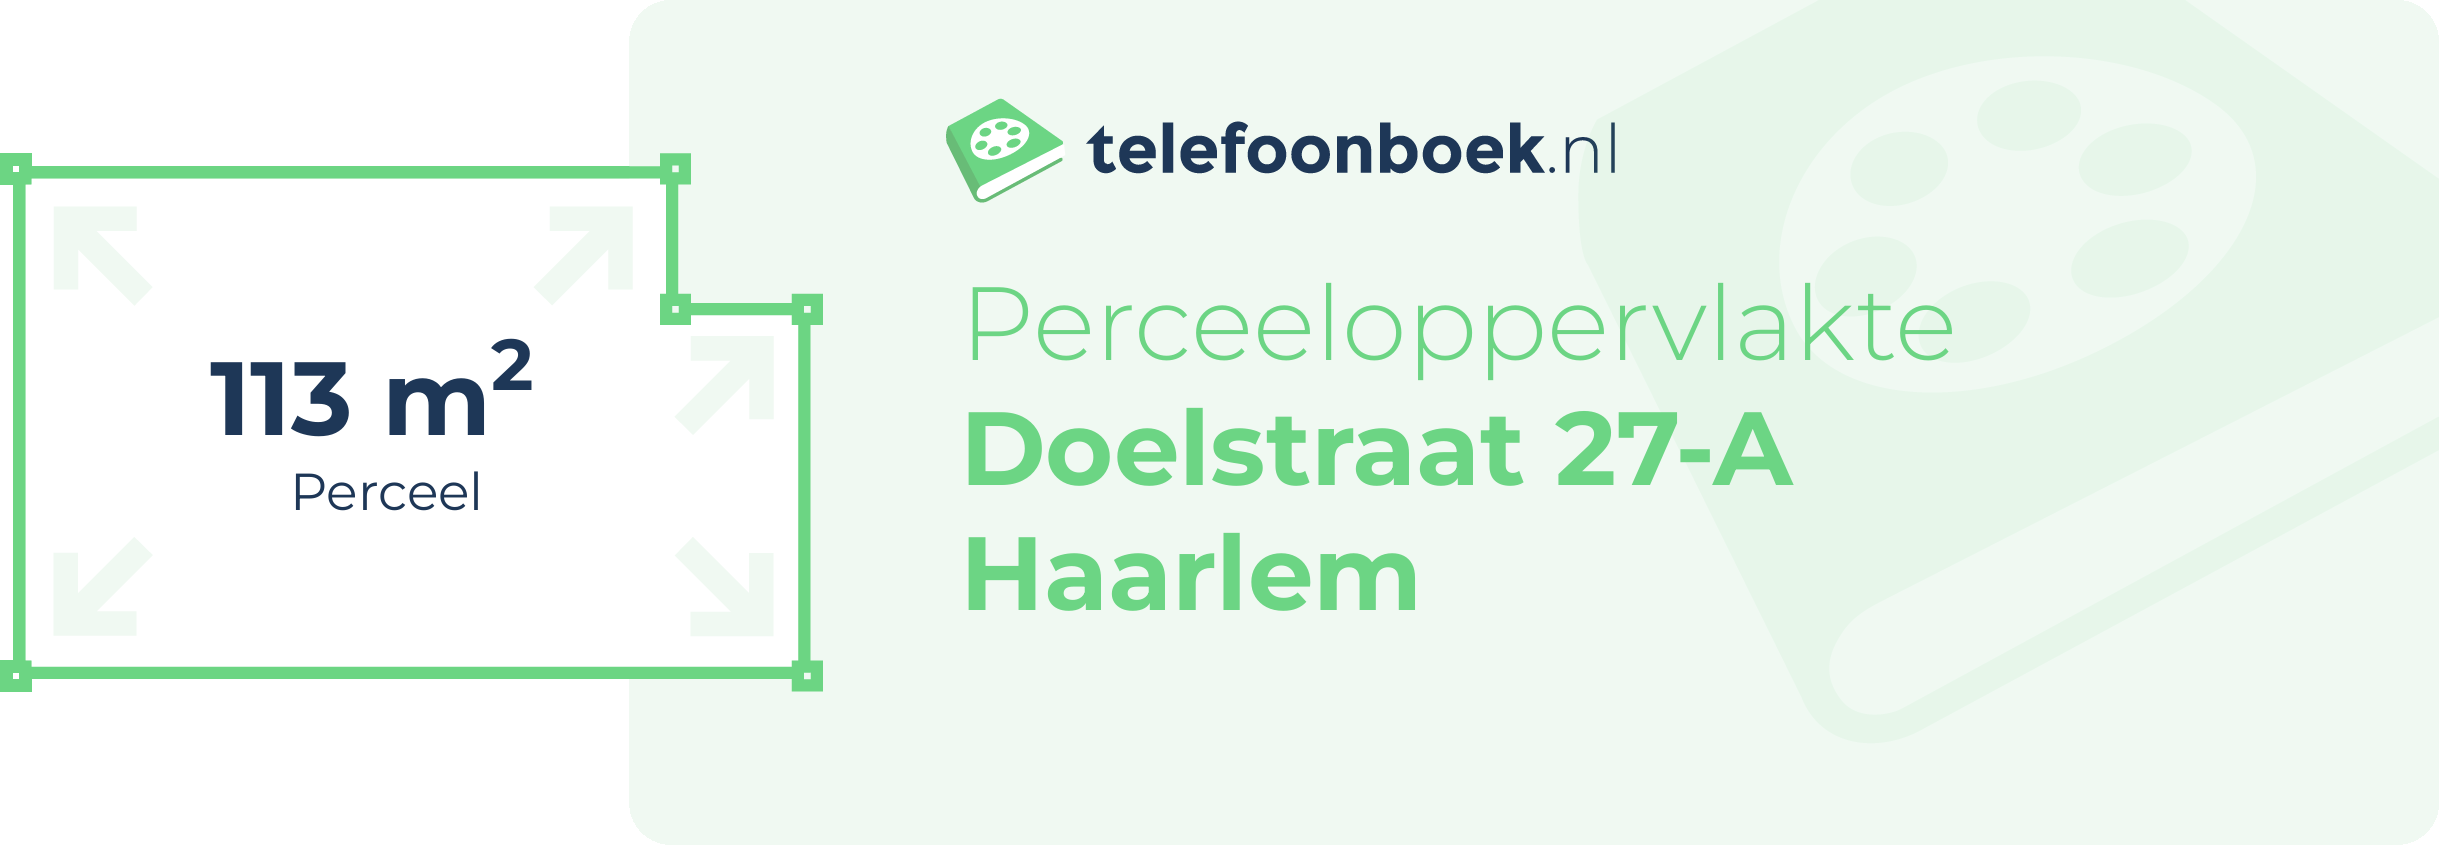 Perceeloppervlakte Doelstraat 27-A Haarlem